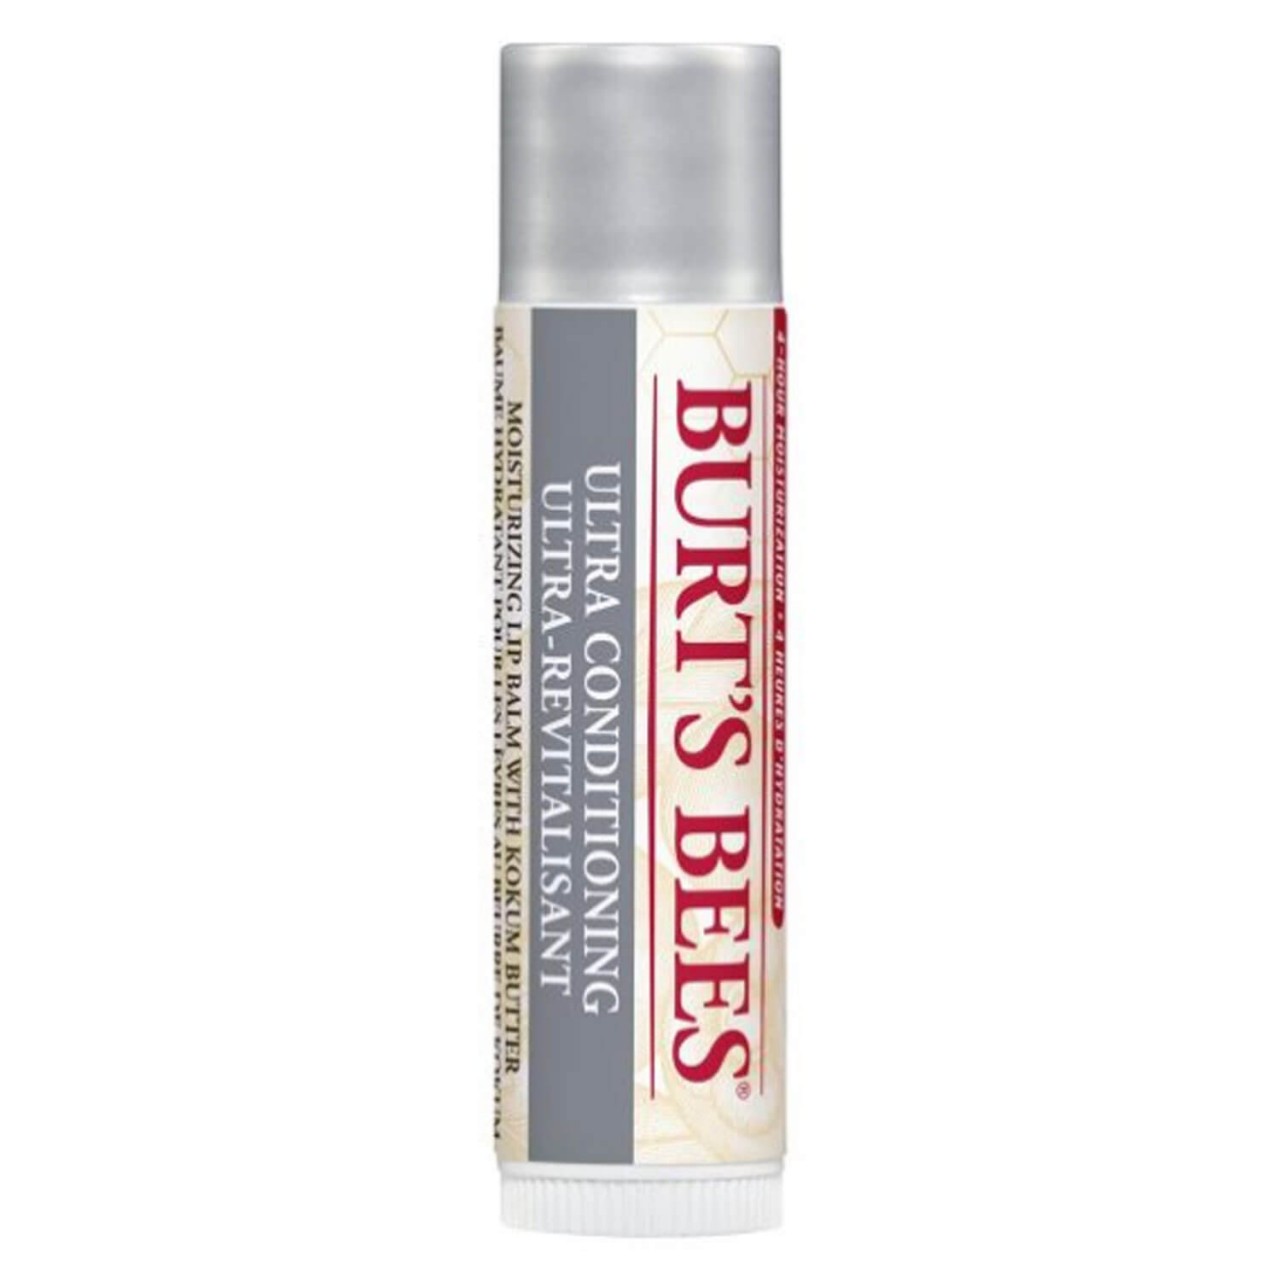 Burt's Bees - Lip Balm Ultra Conditioning Kokum Butter von Burt's Bees